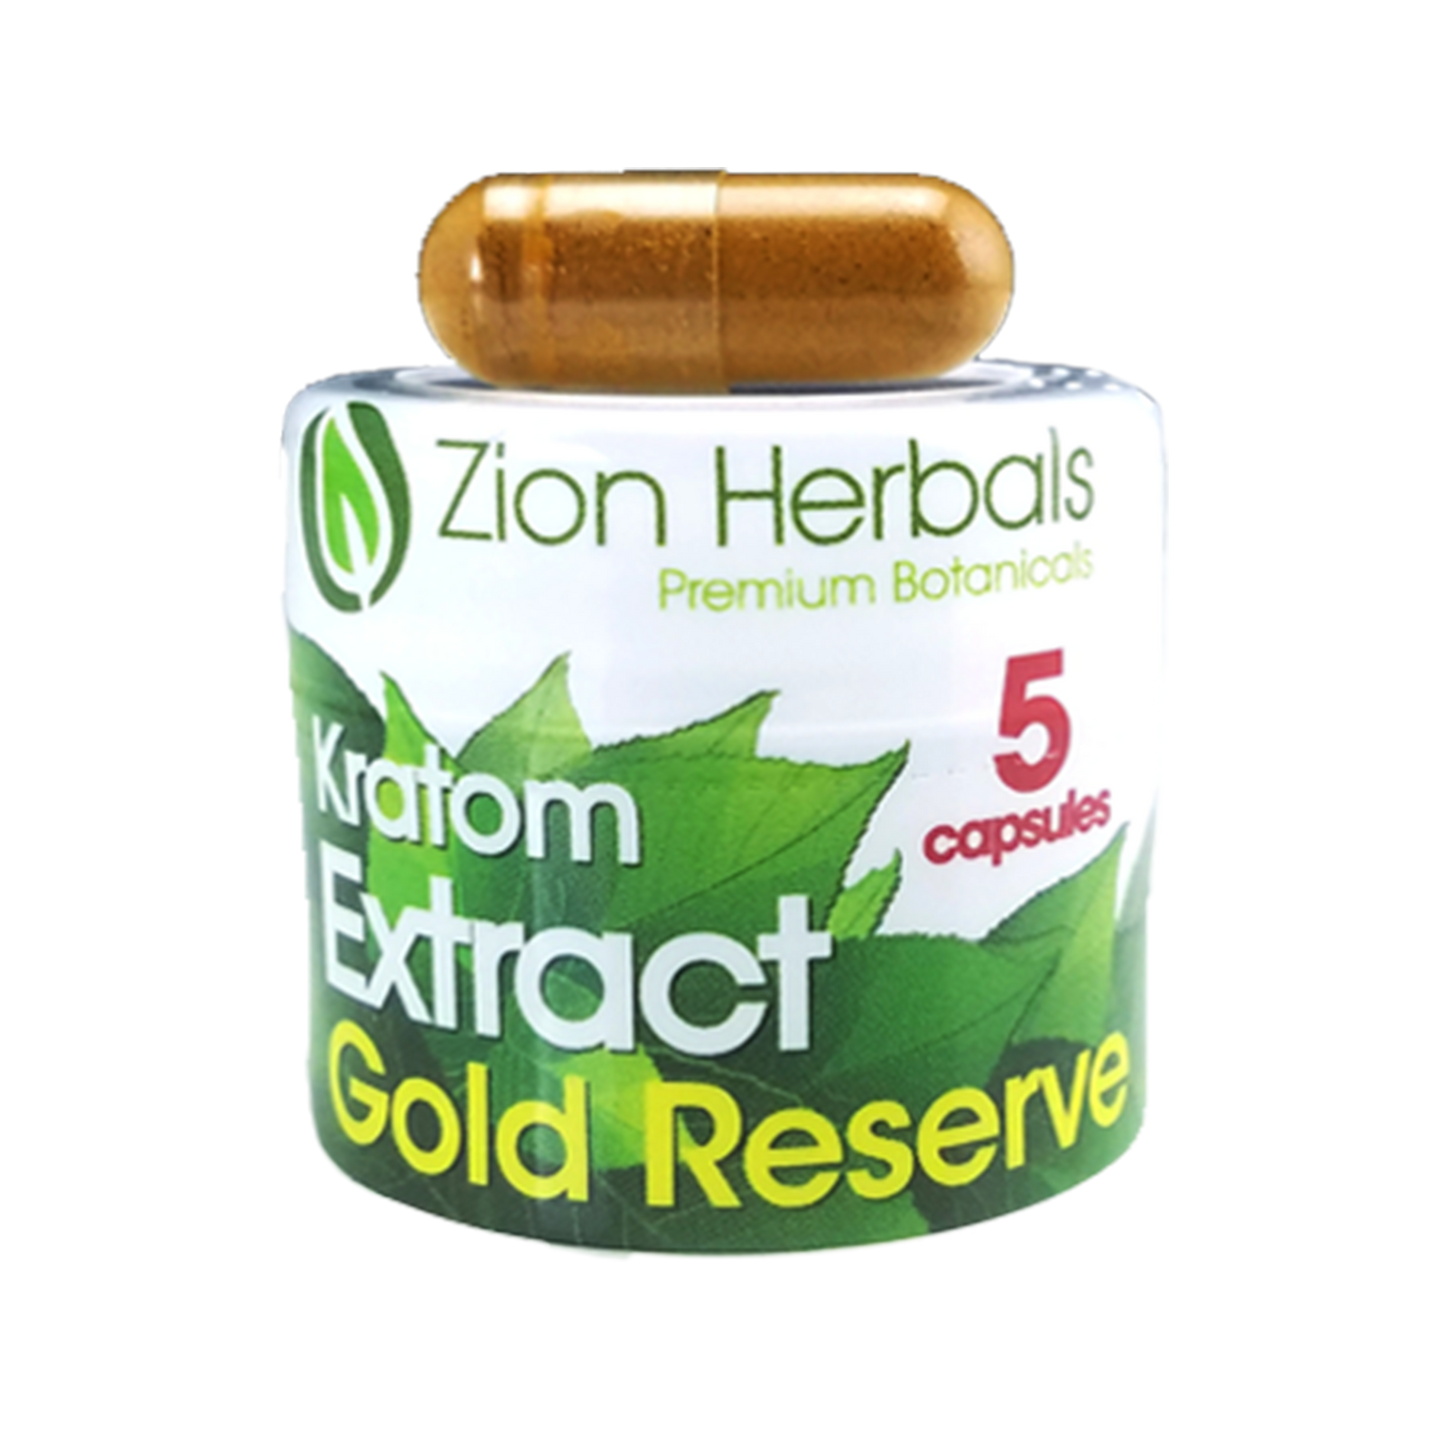 Zion Herbals Gold Reserve Capsule Jar